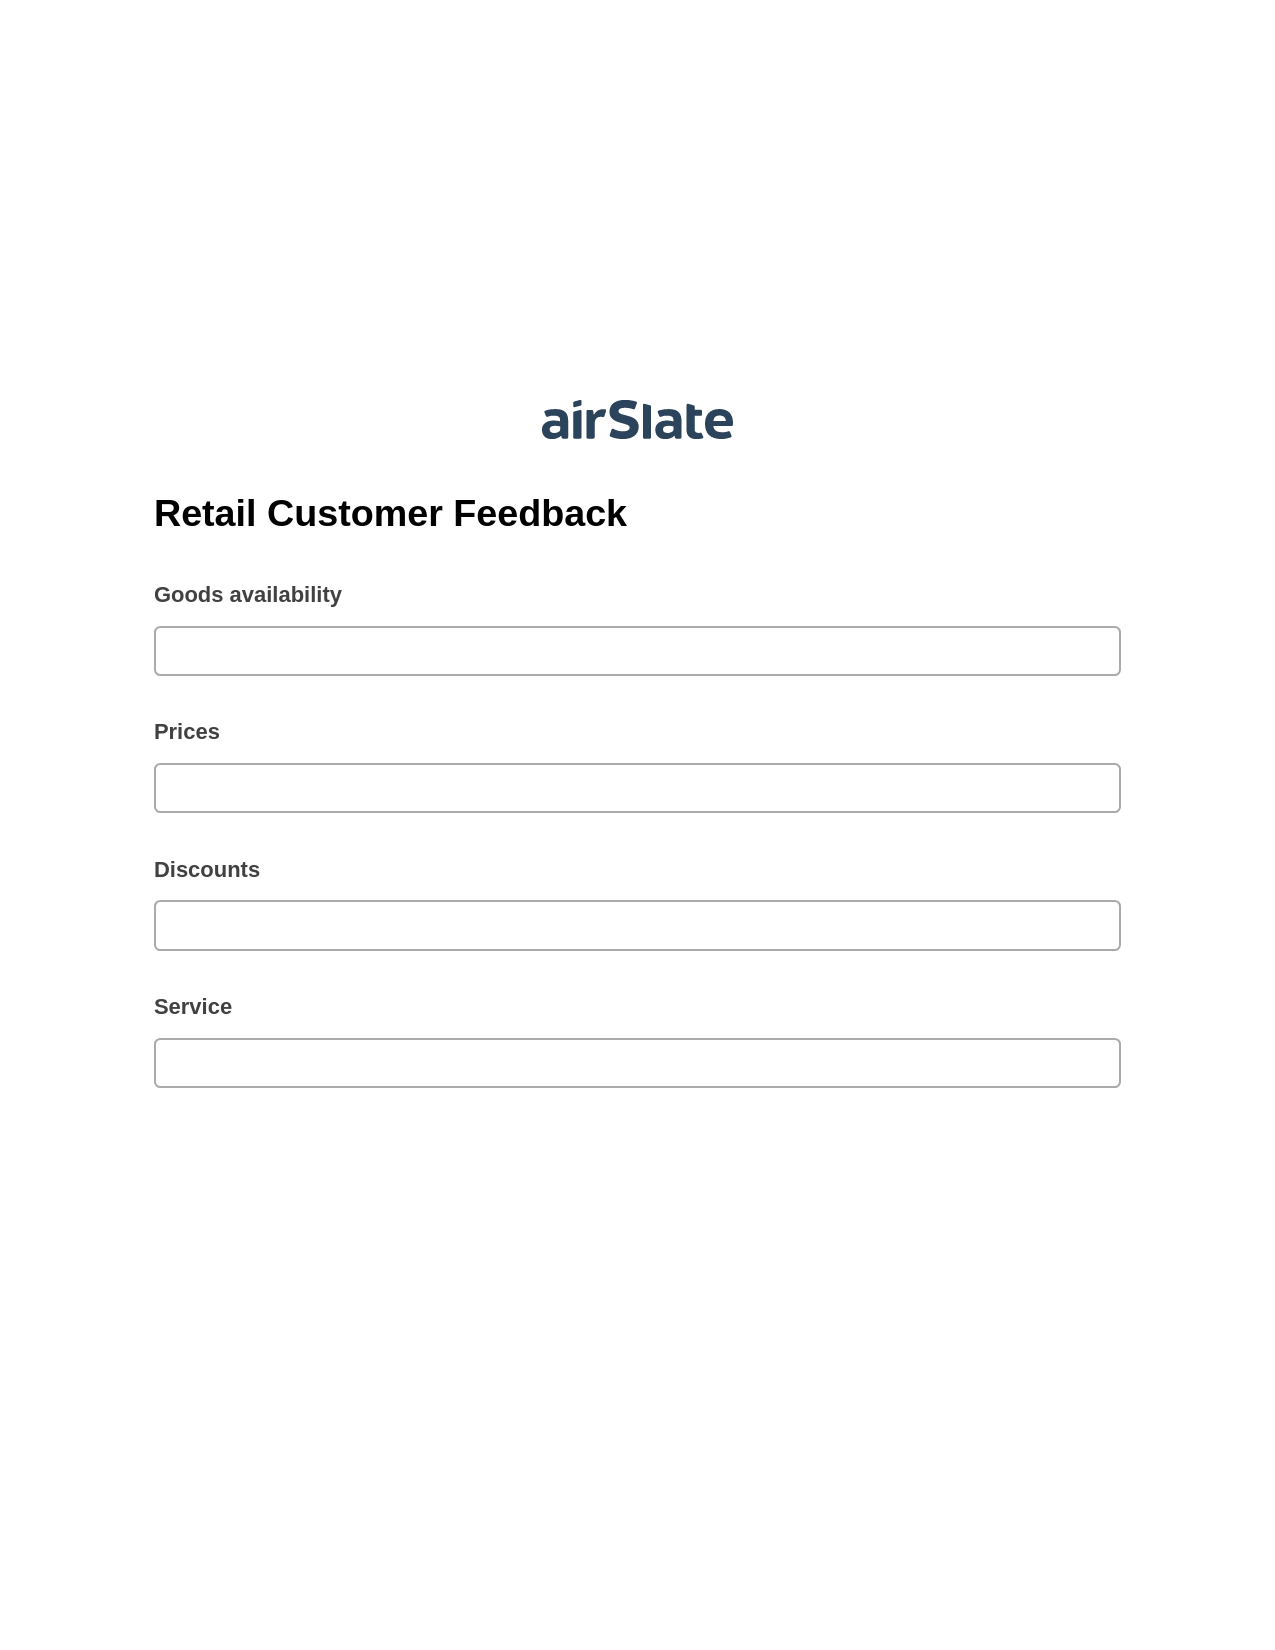 Retail Customer Feedback Pre-fill from MySQL Bot, Create slate addon, Dropbox Bot